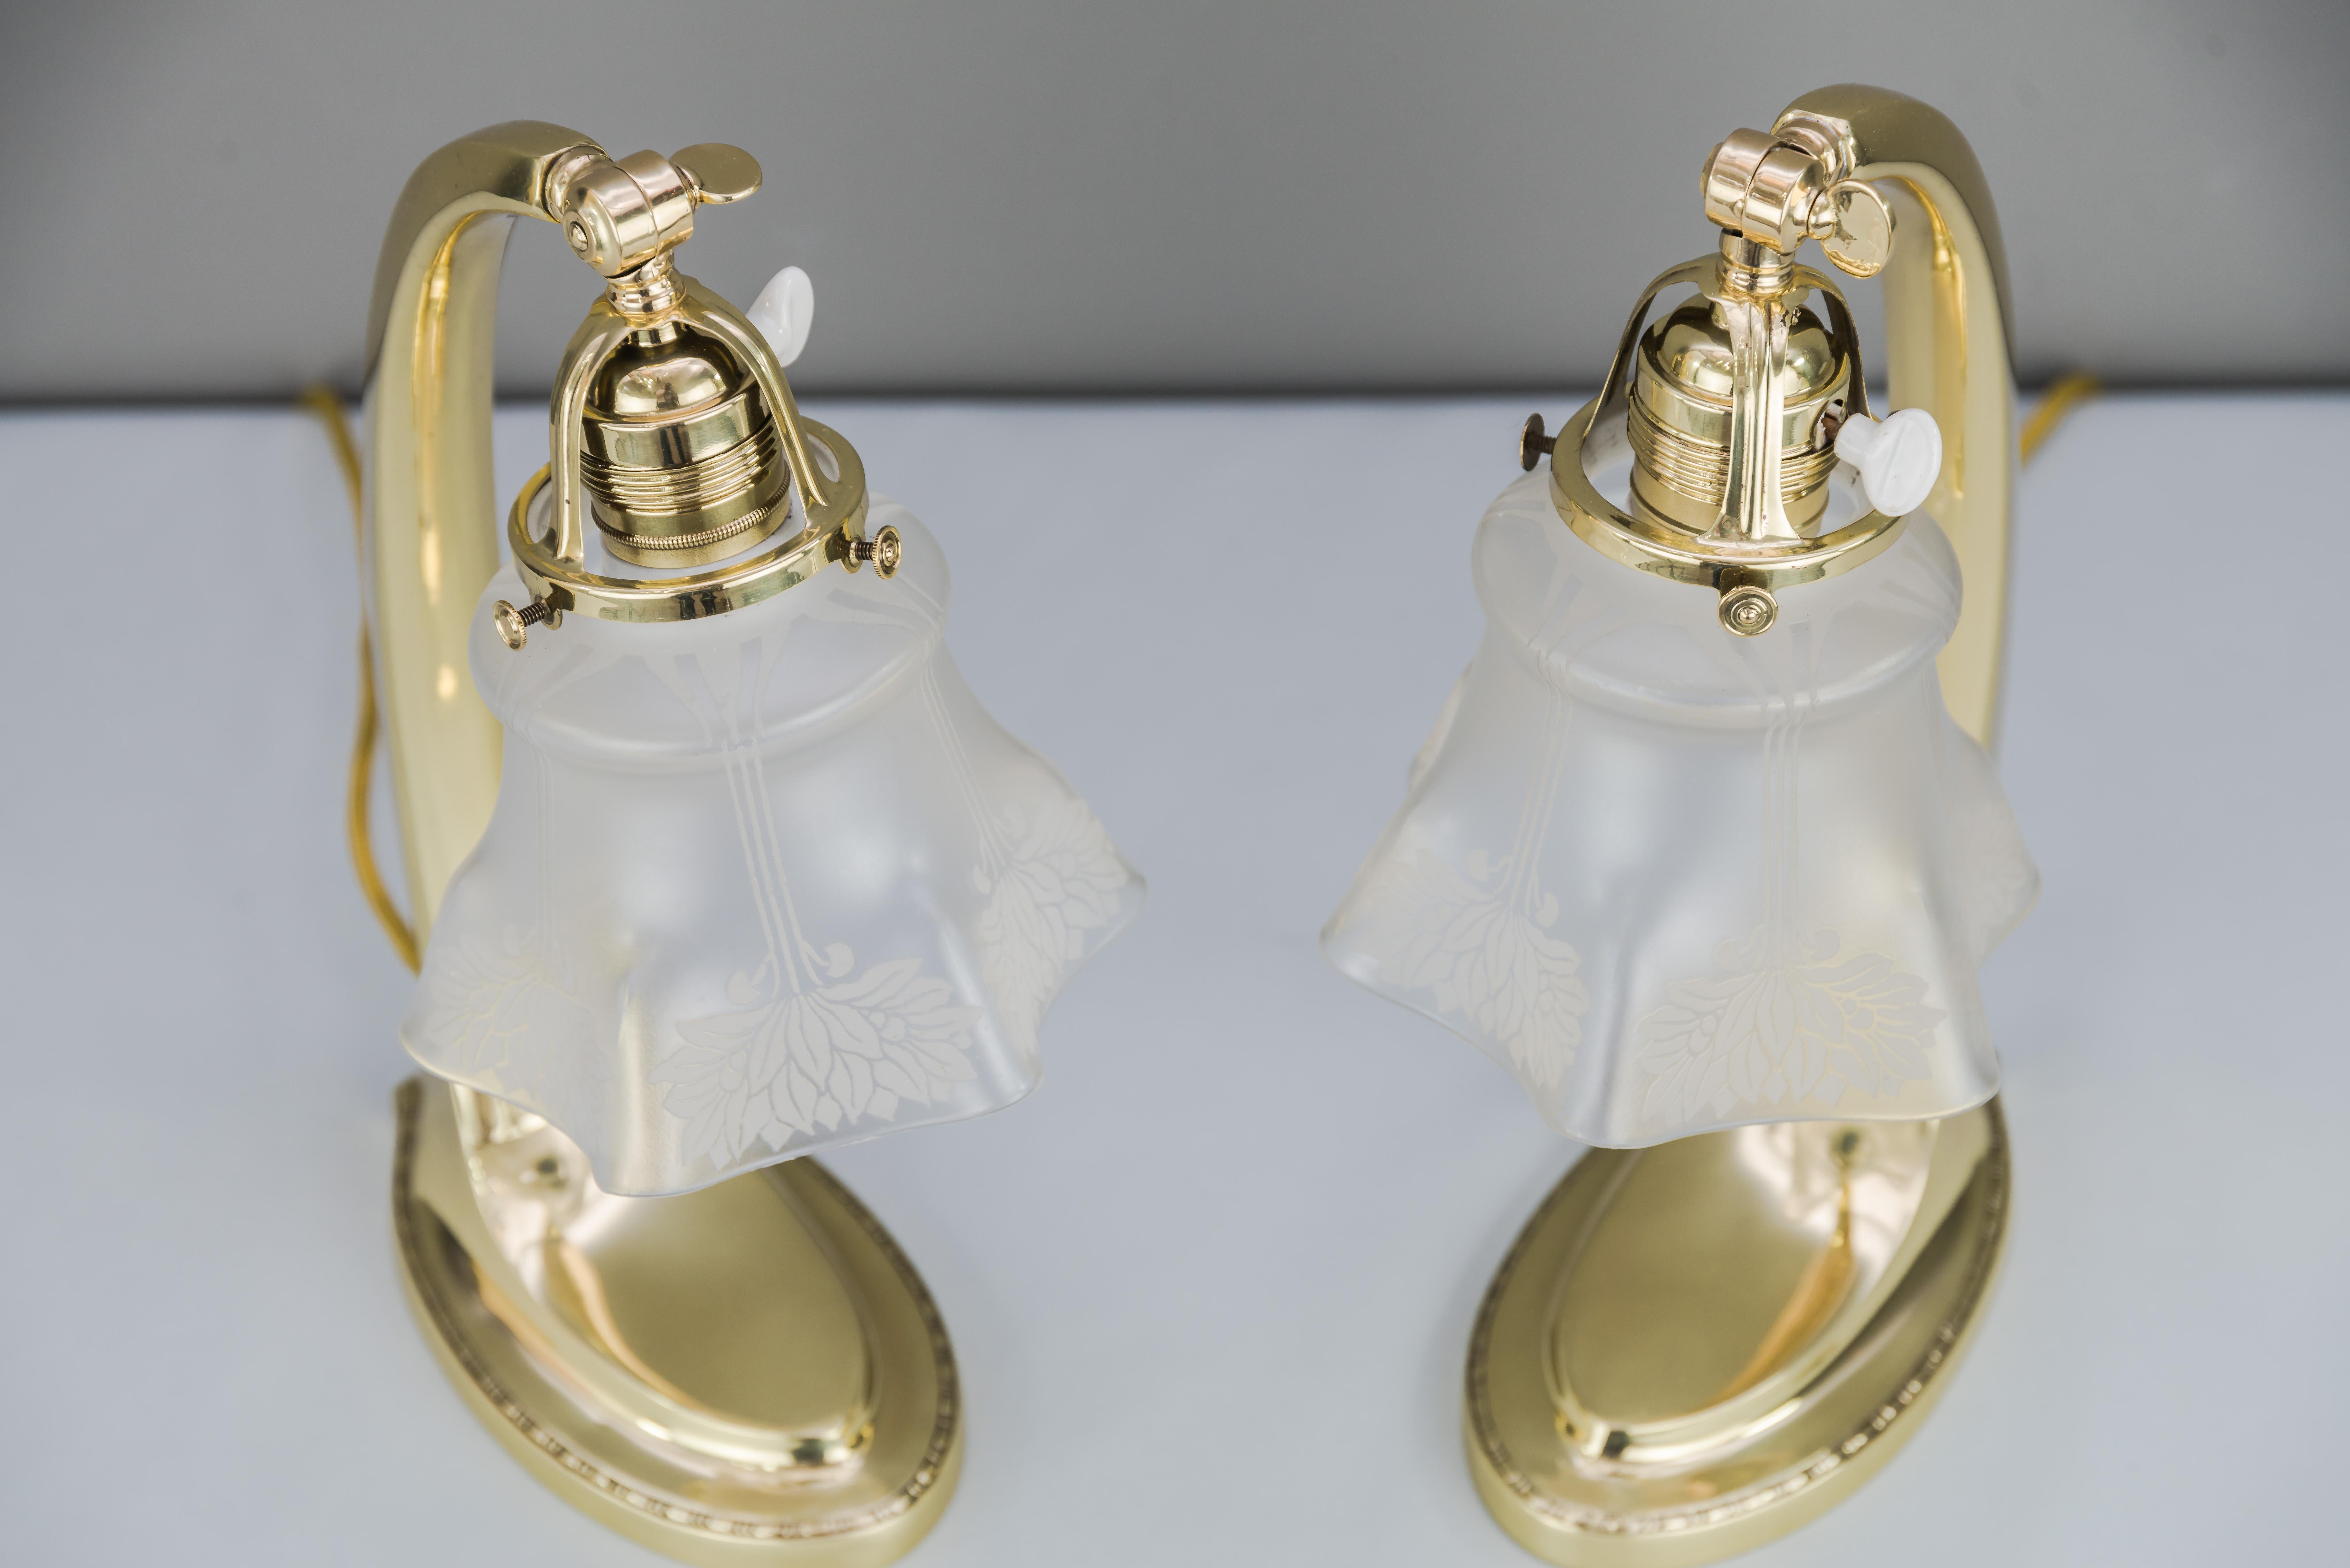 Two Jugendstil table lamps 1907 with original glas shades
Polished and stove enameled.